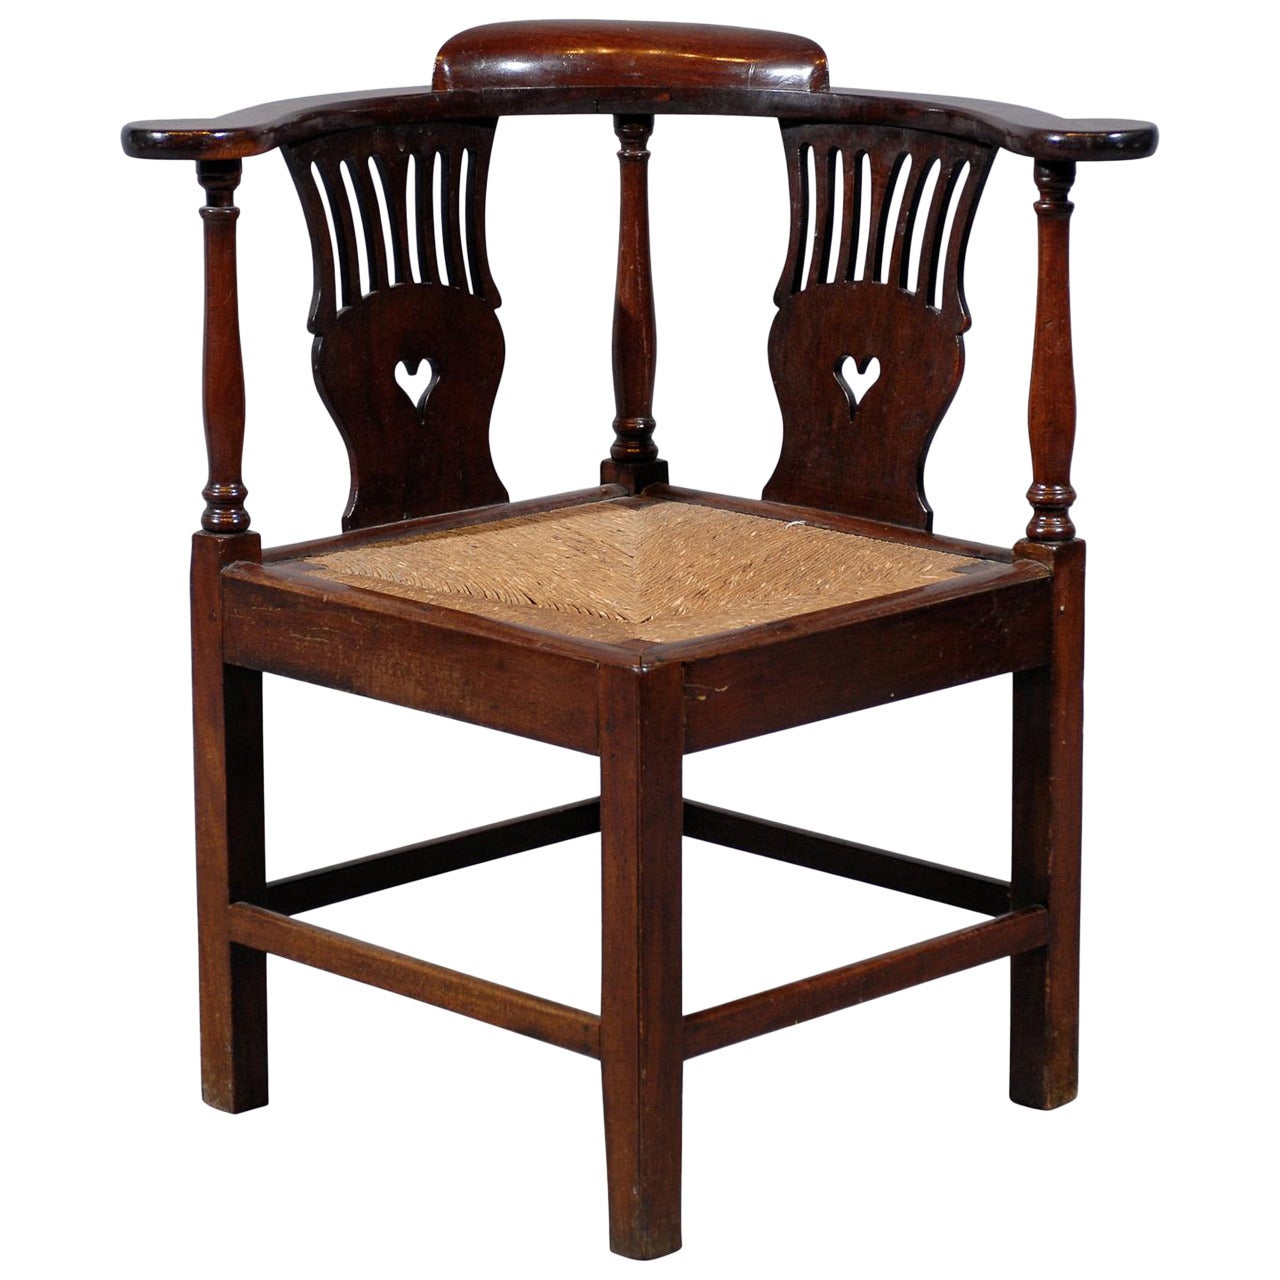 Large 18th Century English Corner Chair with Rush Seat